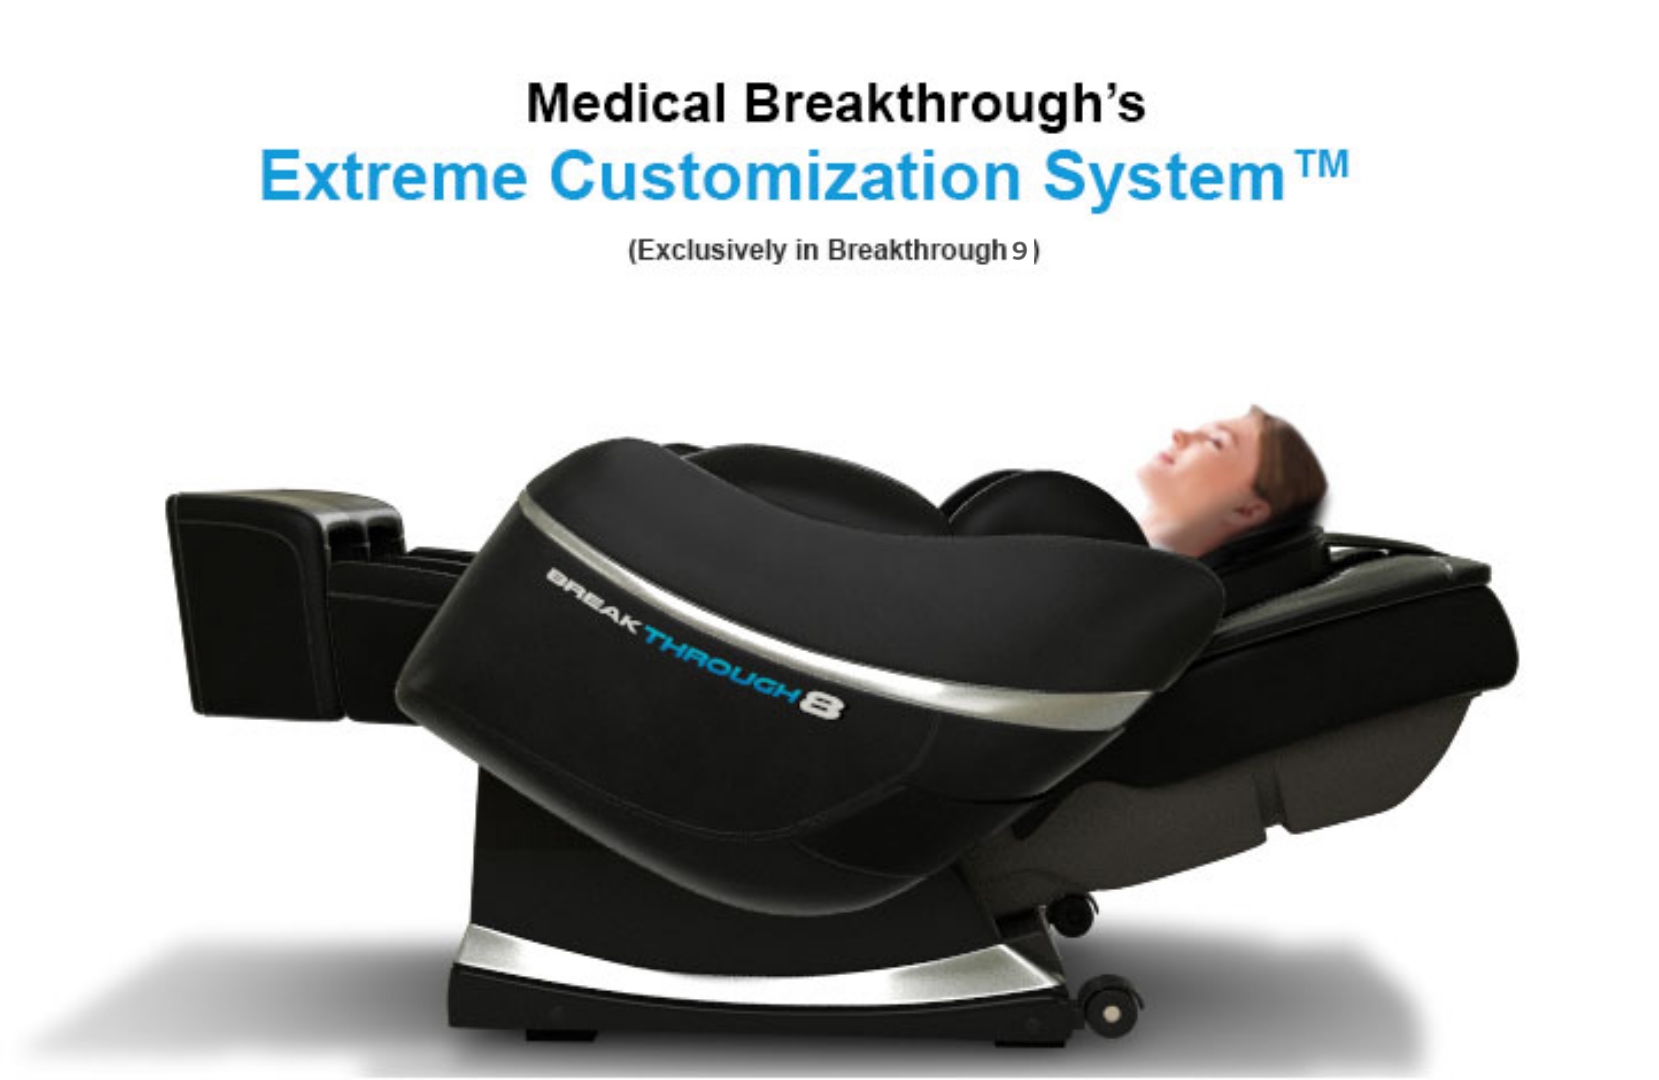 medicalbreakthrough - Extreme Customization System